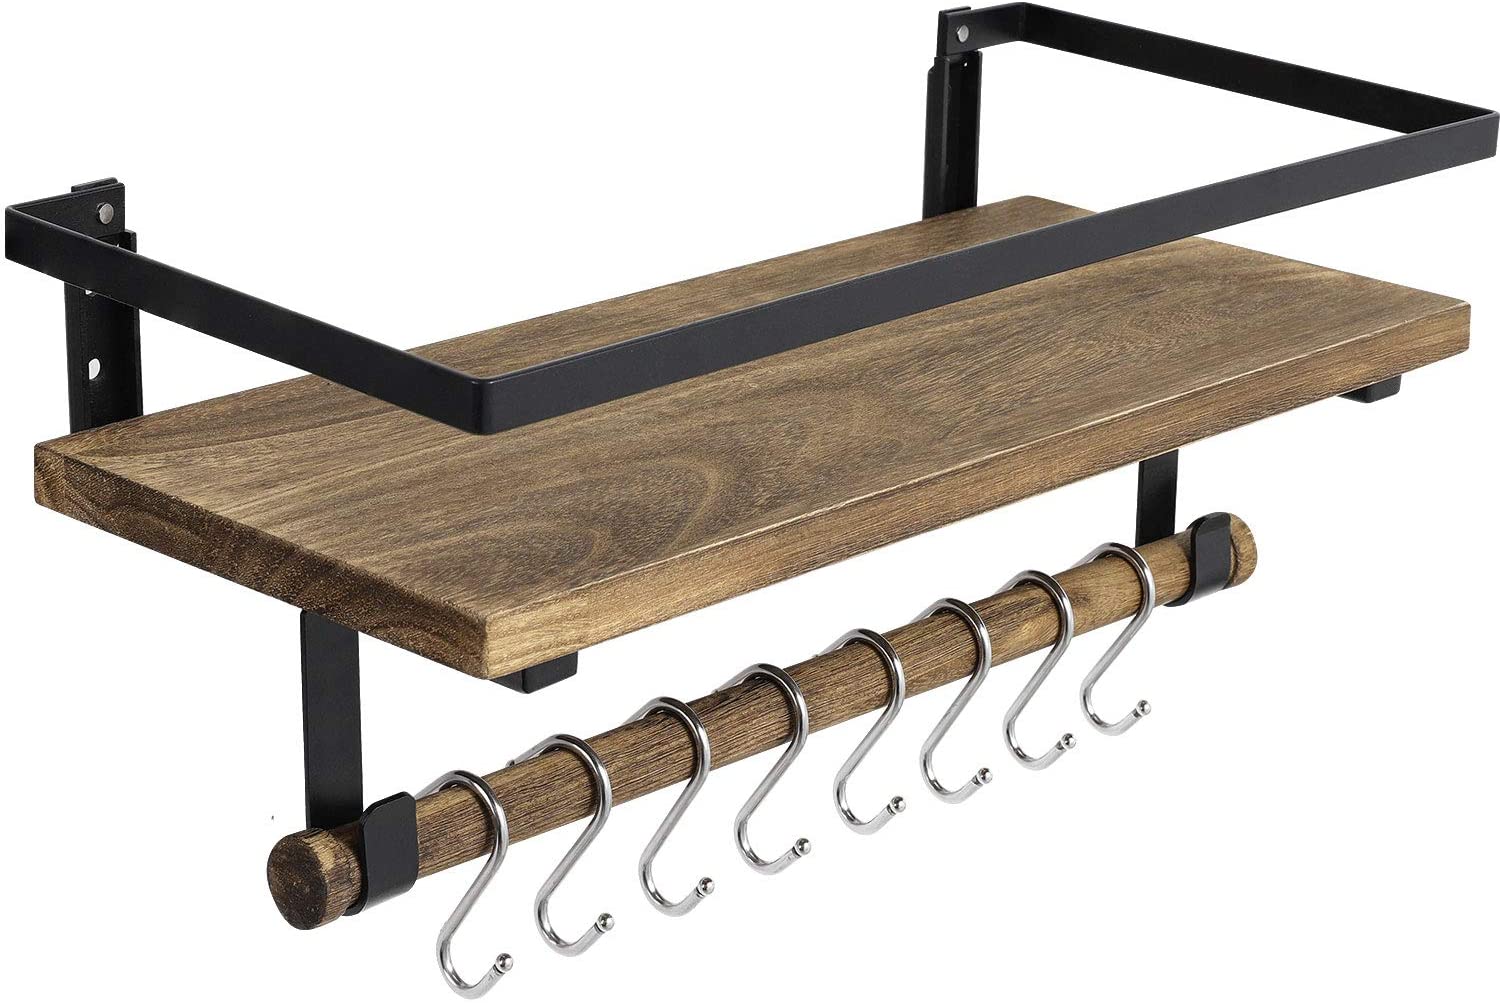 Rustic Wood Shelf For Bathroom Kitchen Decor Storage Shelf With 8 Removable Hooks And Towel Bar Wooden Shelf